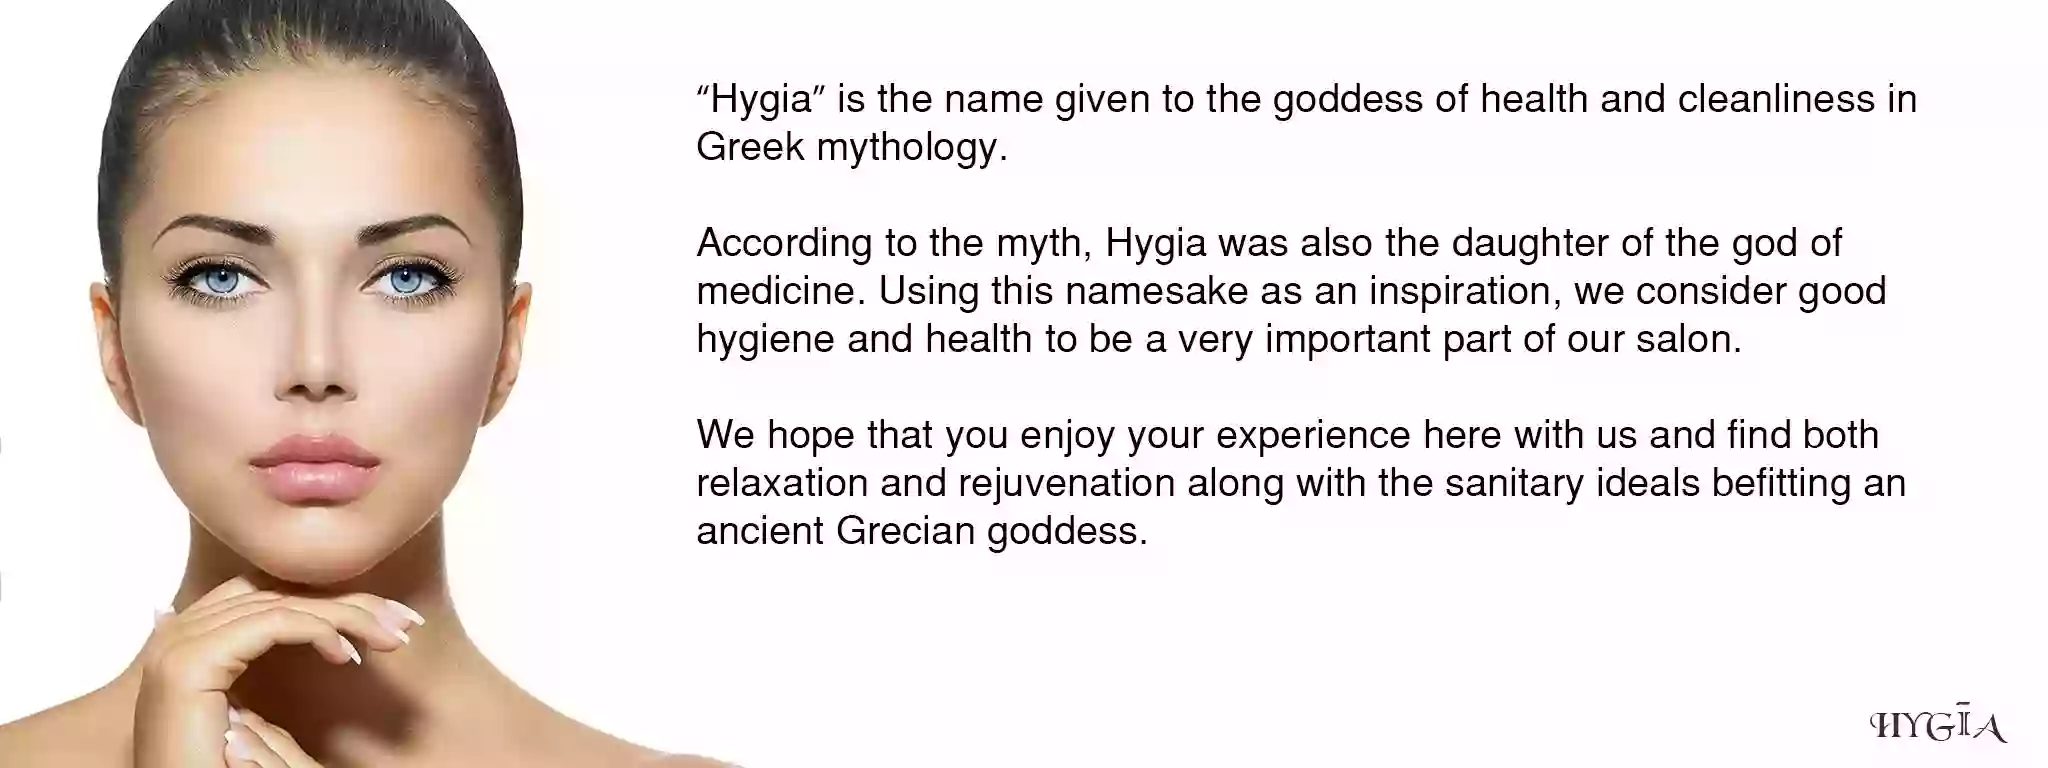 Hygia Nails & Spa